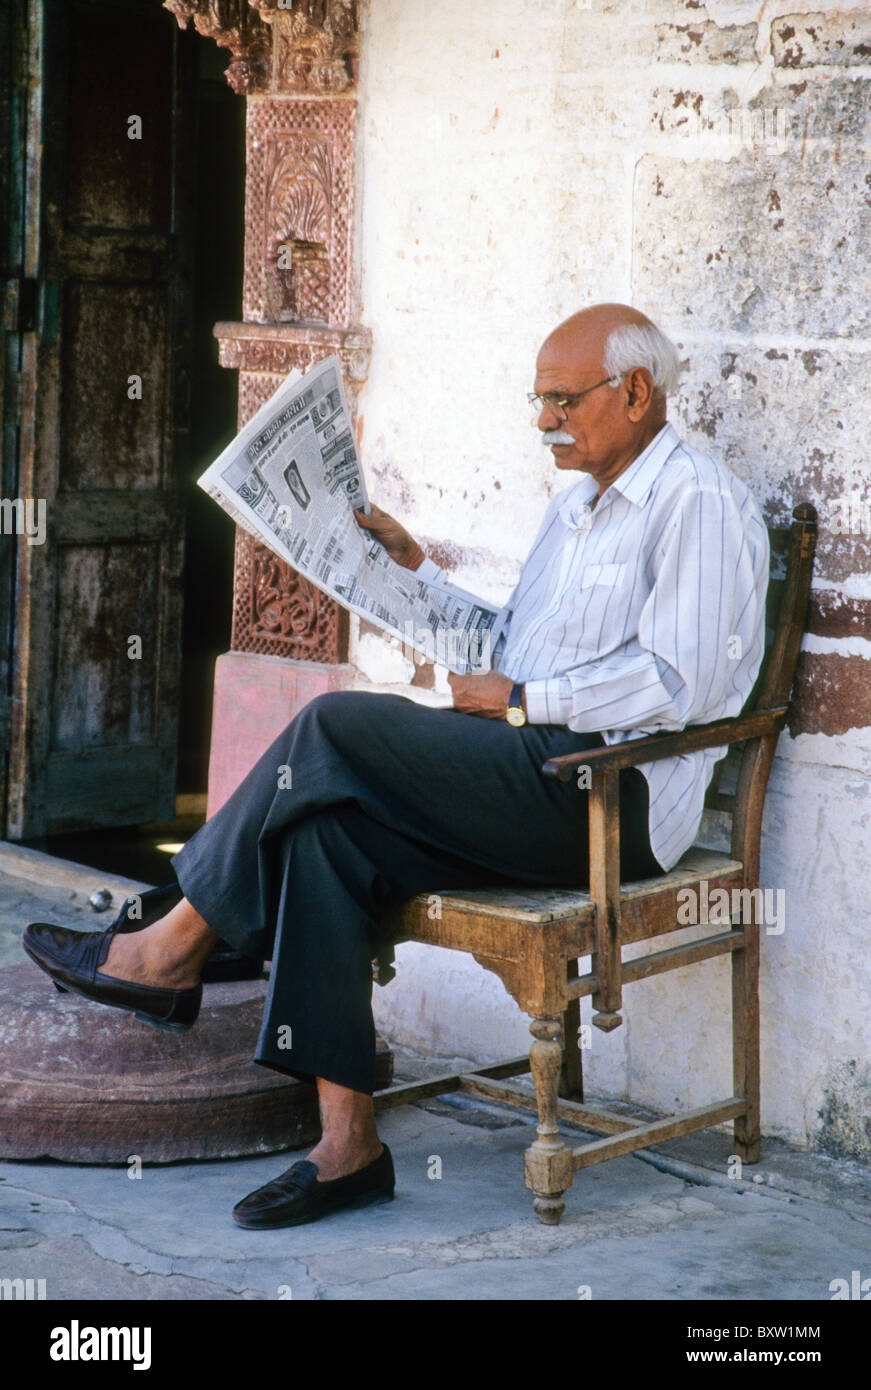 old-man-reading-newspaper-jodhpur-rajasthan-india-BXW1MM.jpg